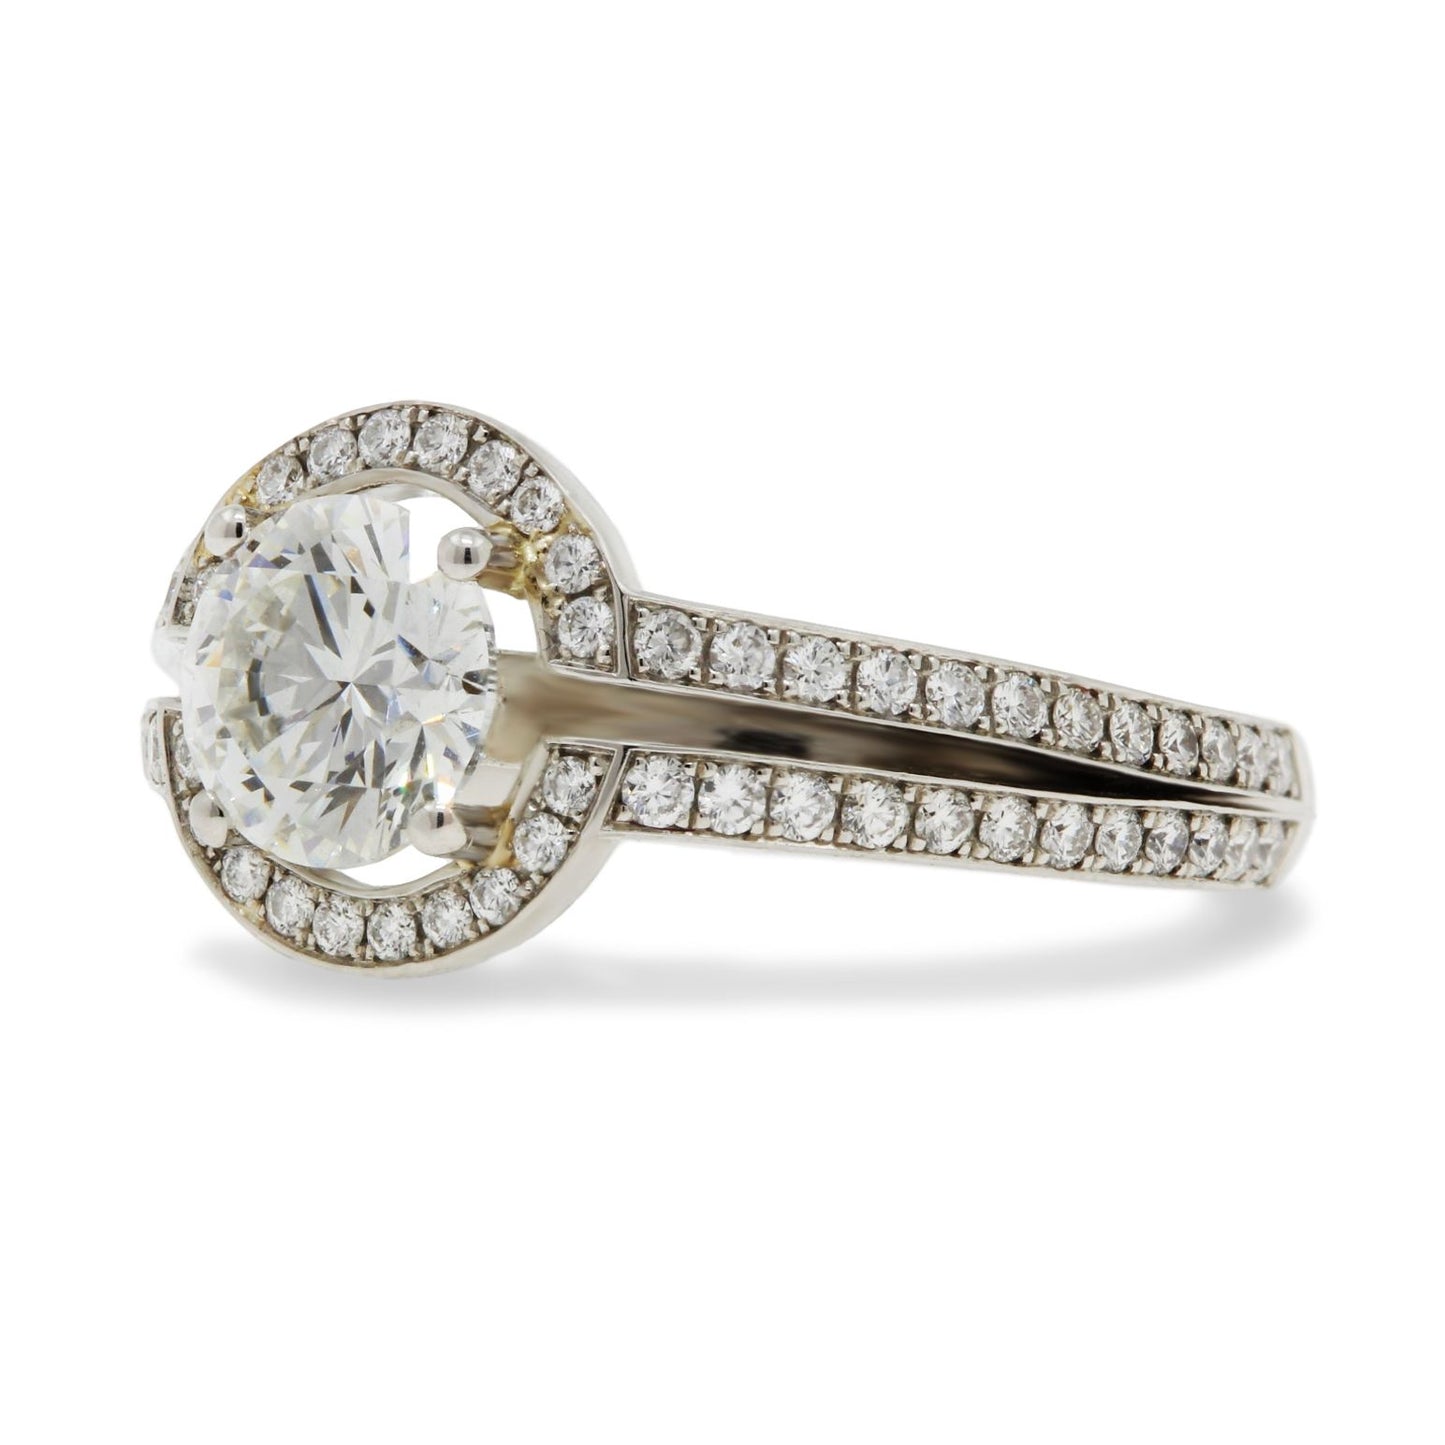 Platinum round brilliant cut diamond solitaire ring grain set surround & open split shoulders - 1.01ct